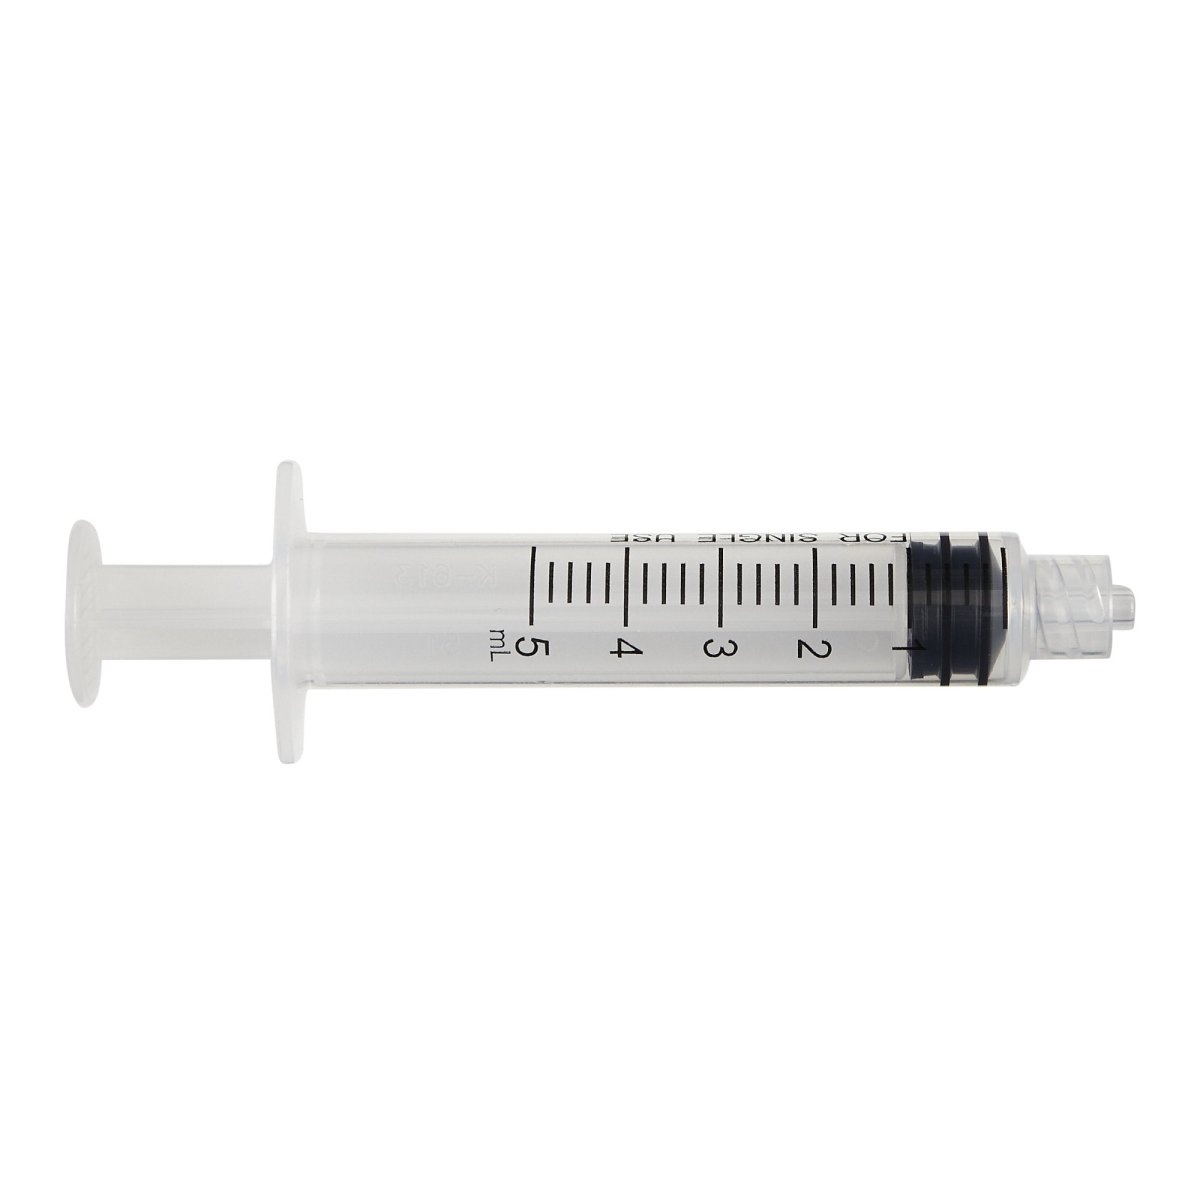 BD 309628 1 ml General Use Syringe (No Needle) Luer-Lok™ Tip